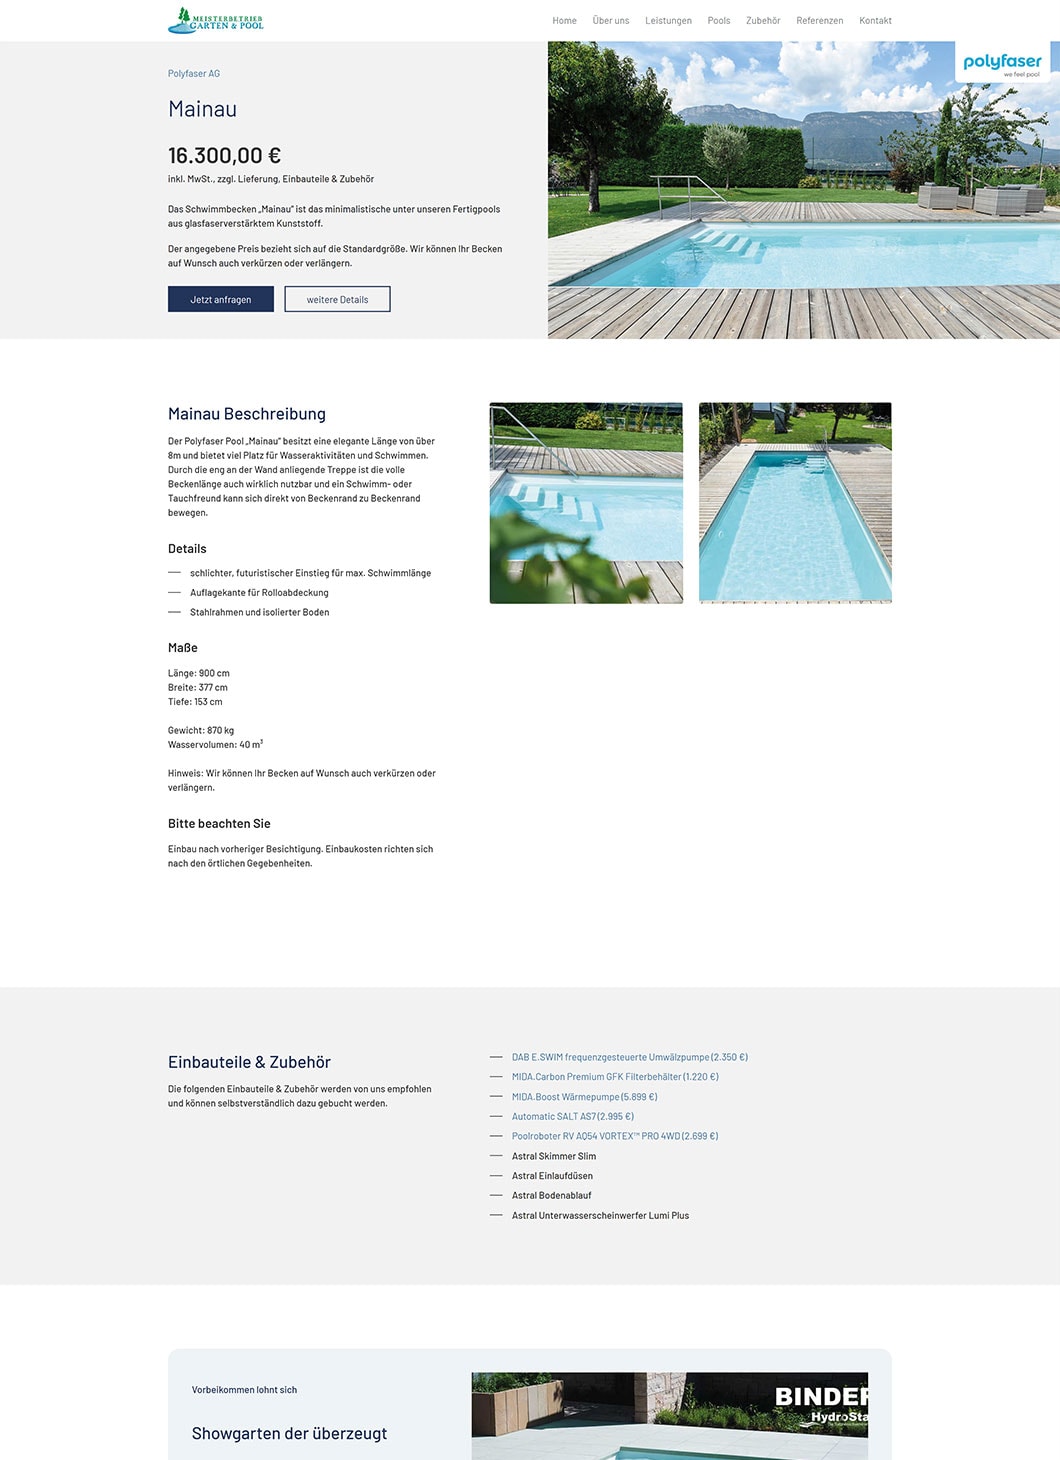 Garten & Pool Marco Gropper GmbH Polyfaser Mainau Pool